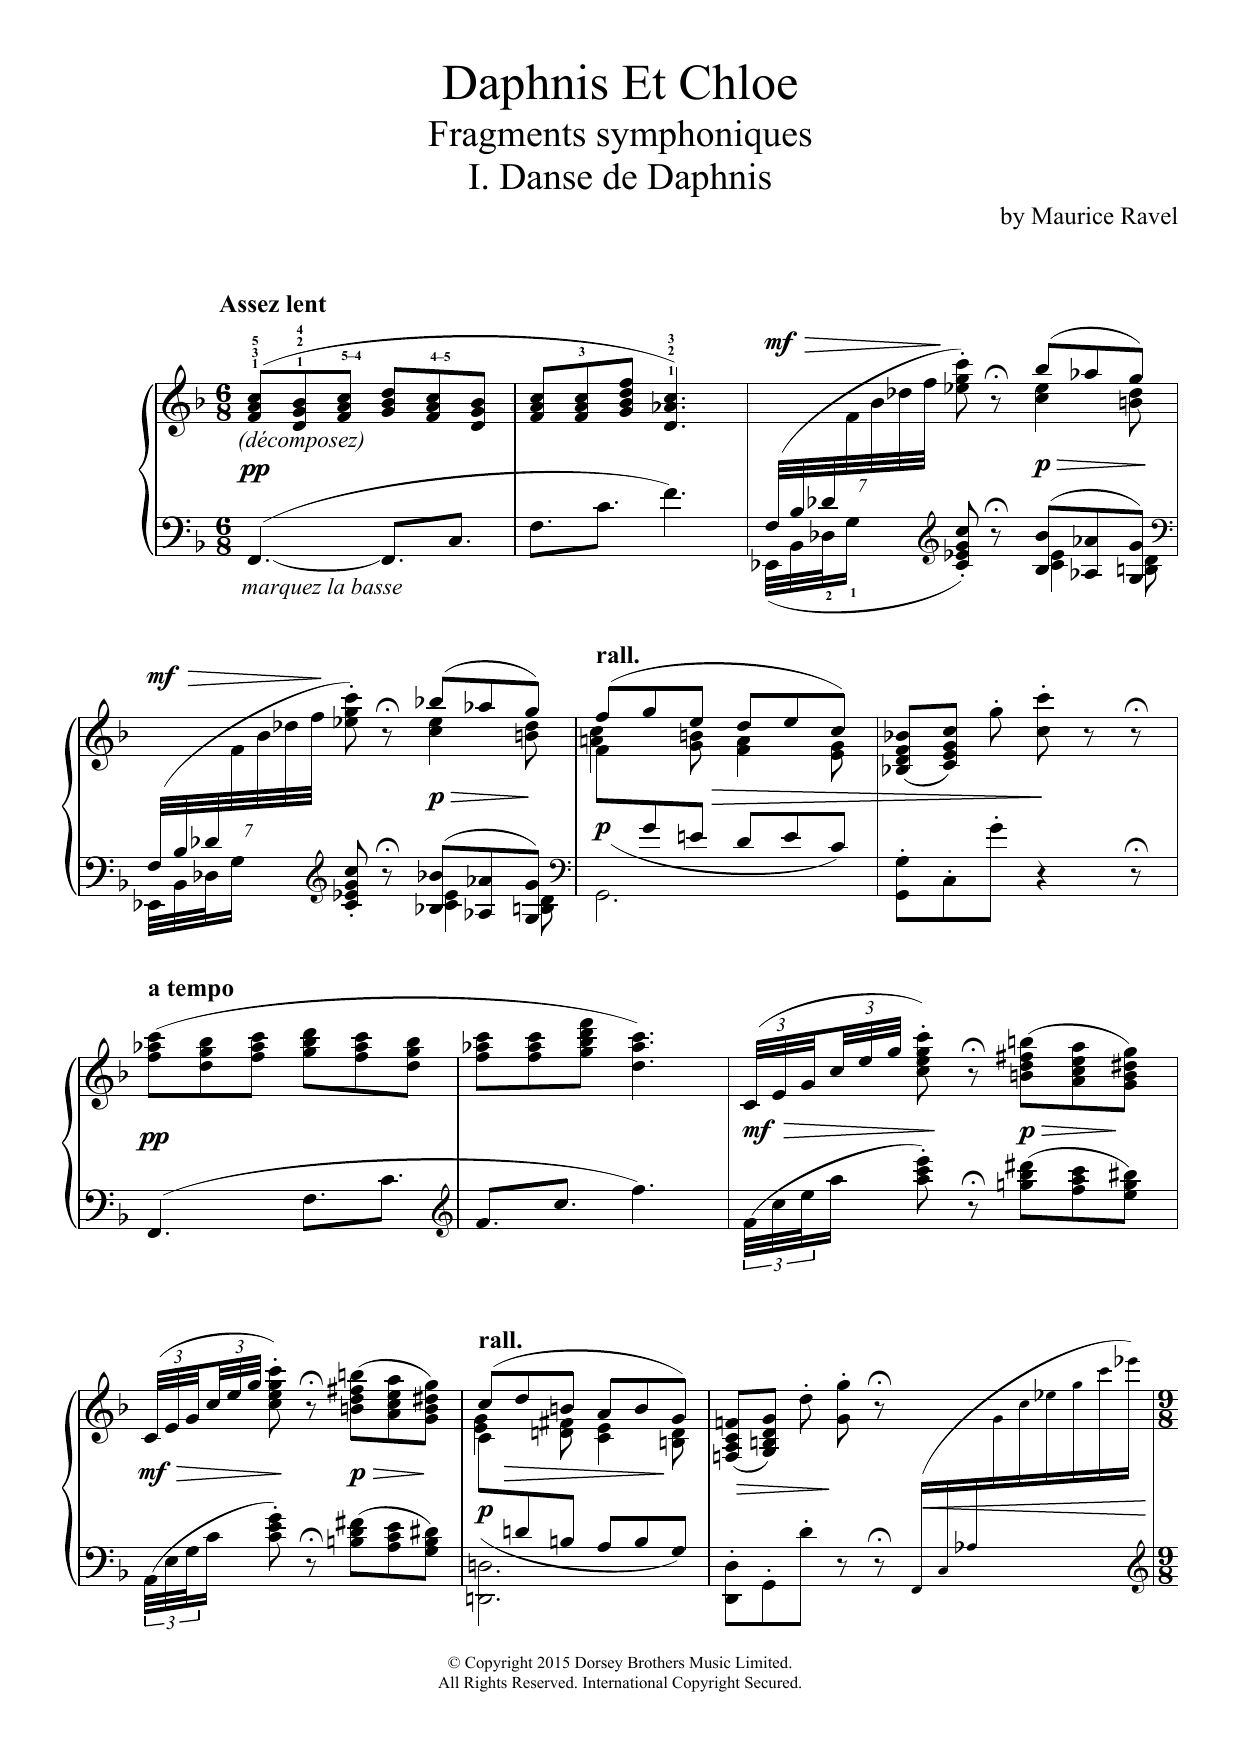 Maurice Ravel Daphnis Et Chloe - I. Danse De Daphnis Sheet Music Notes & Chords for Piano - Download or Print PDF